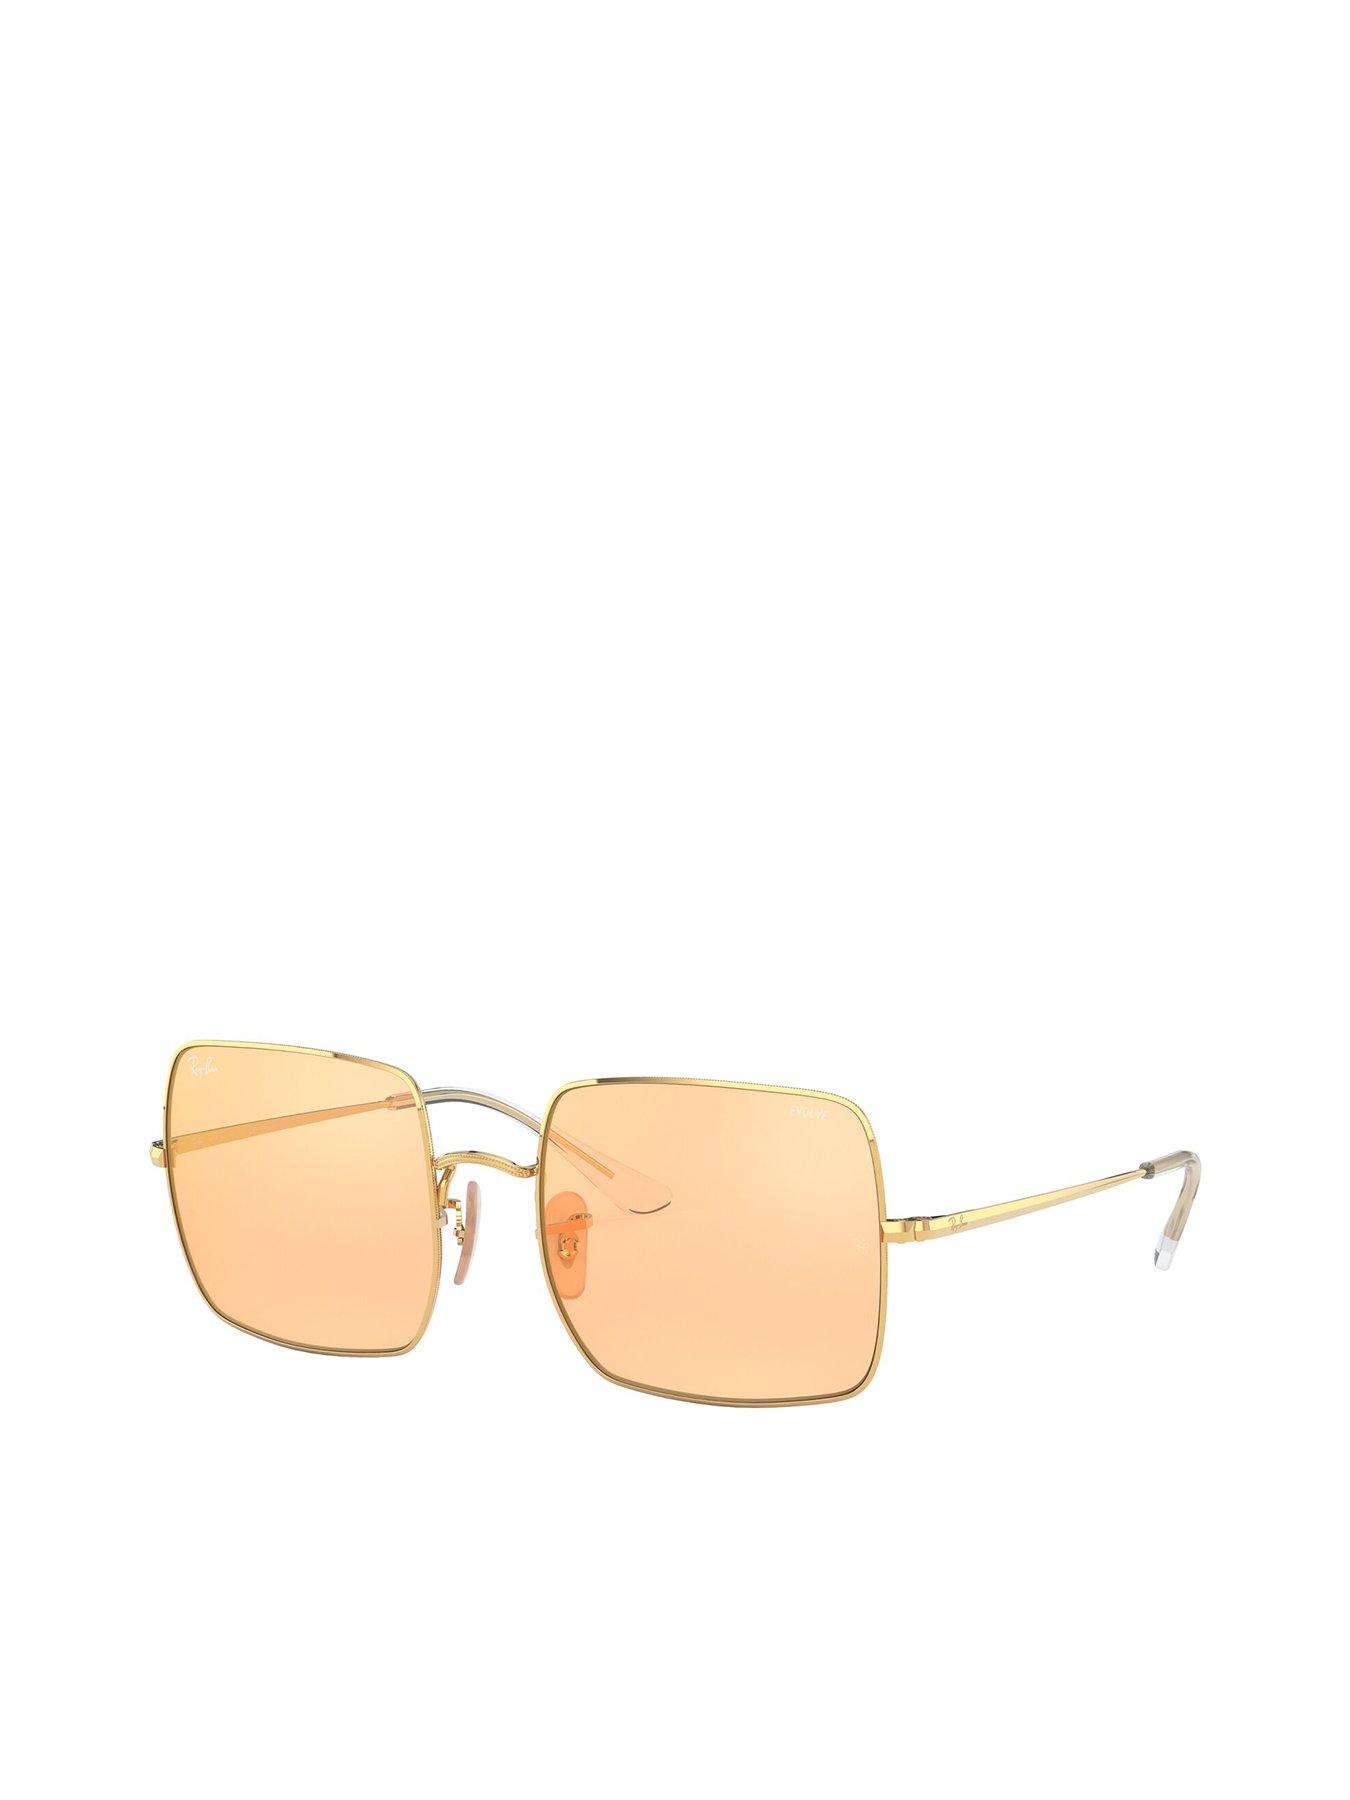 Women Square Sunglasses - Shiny Gold